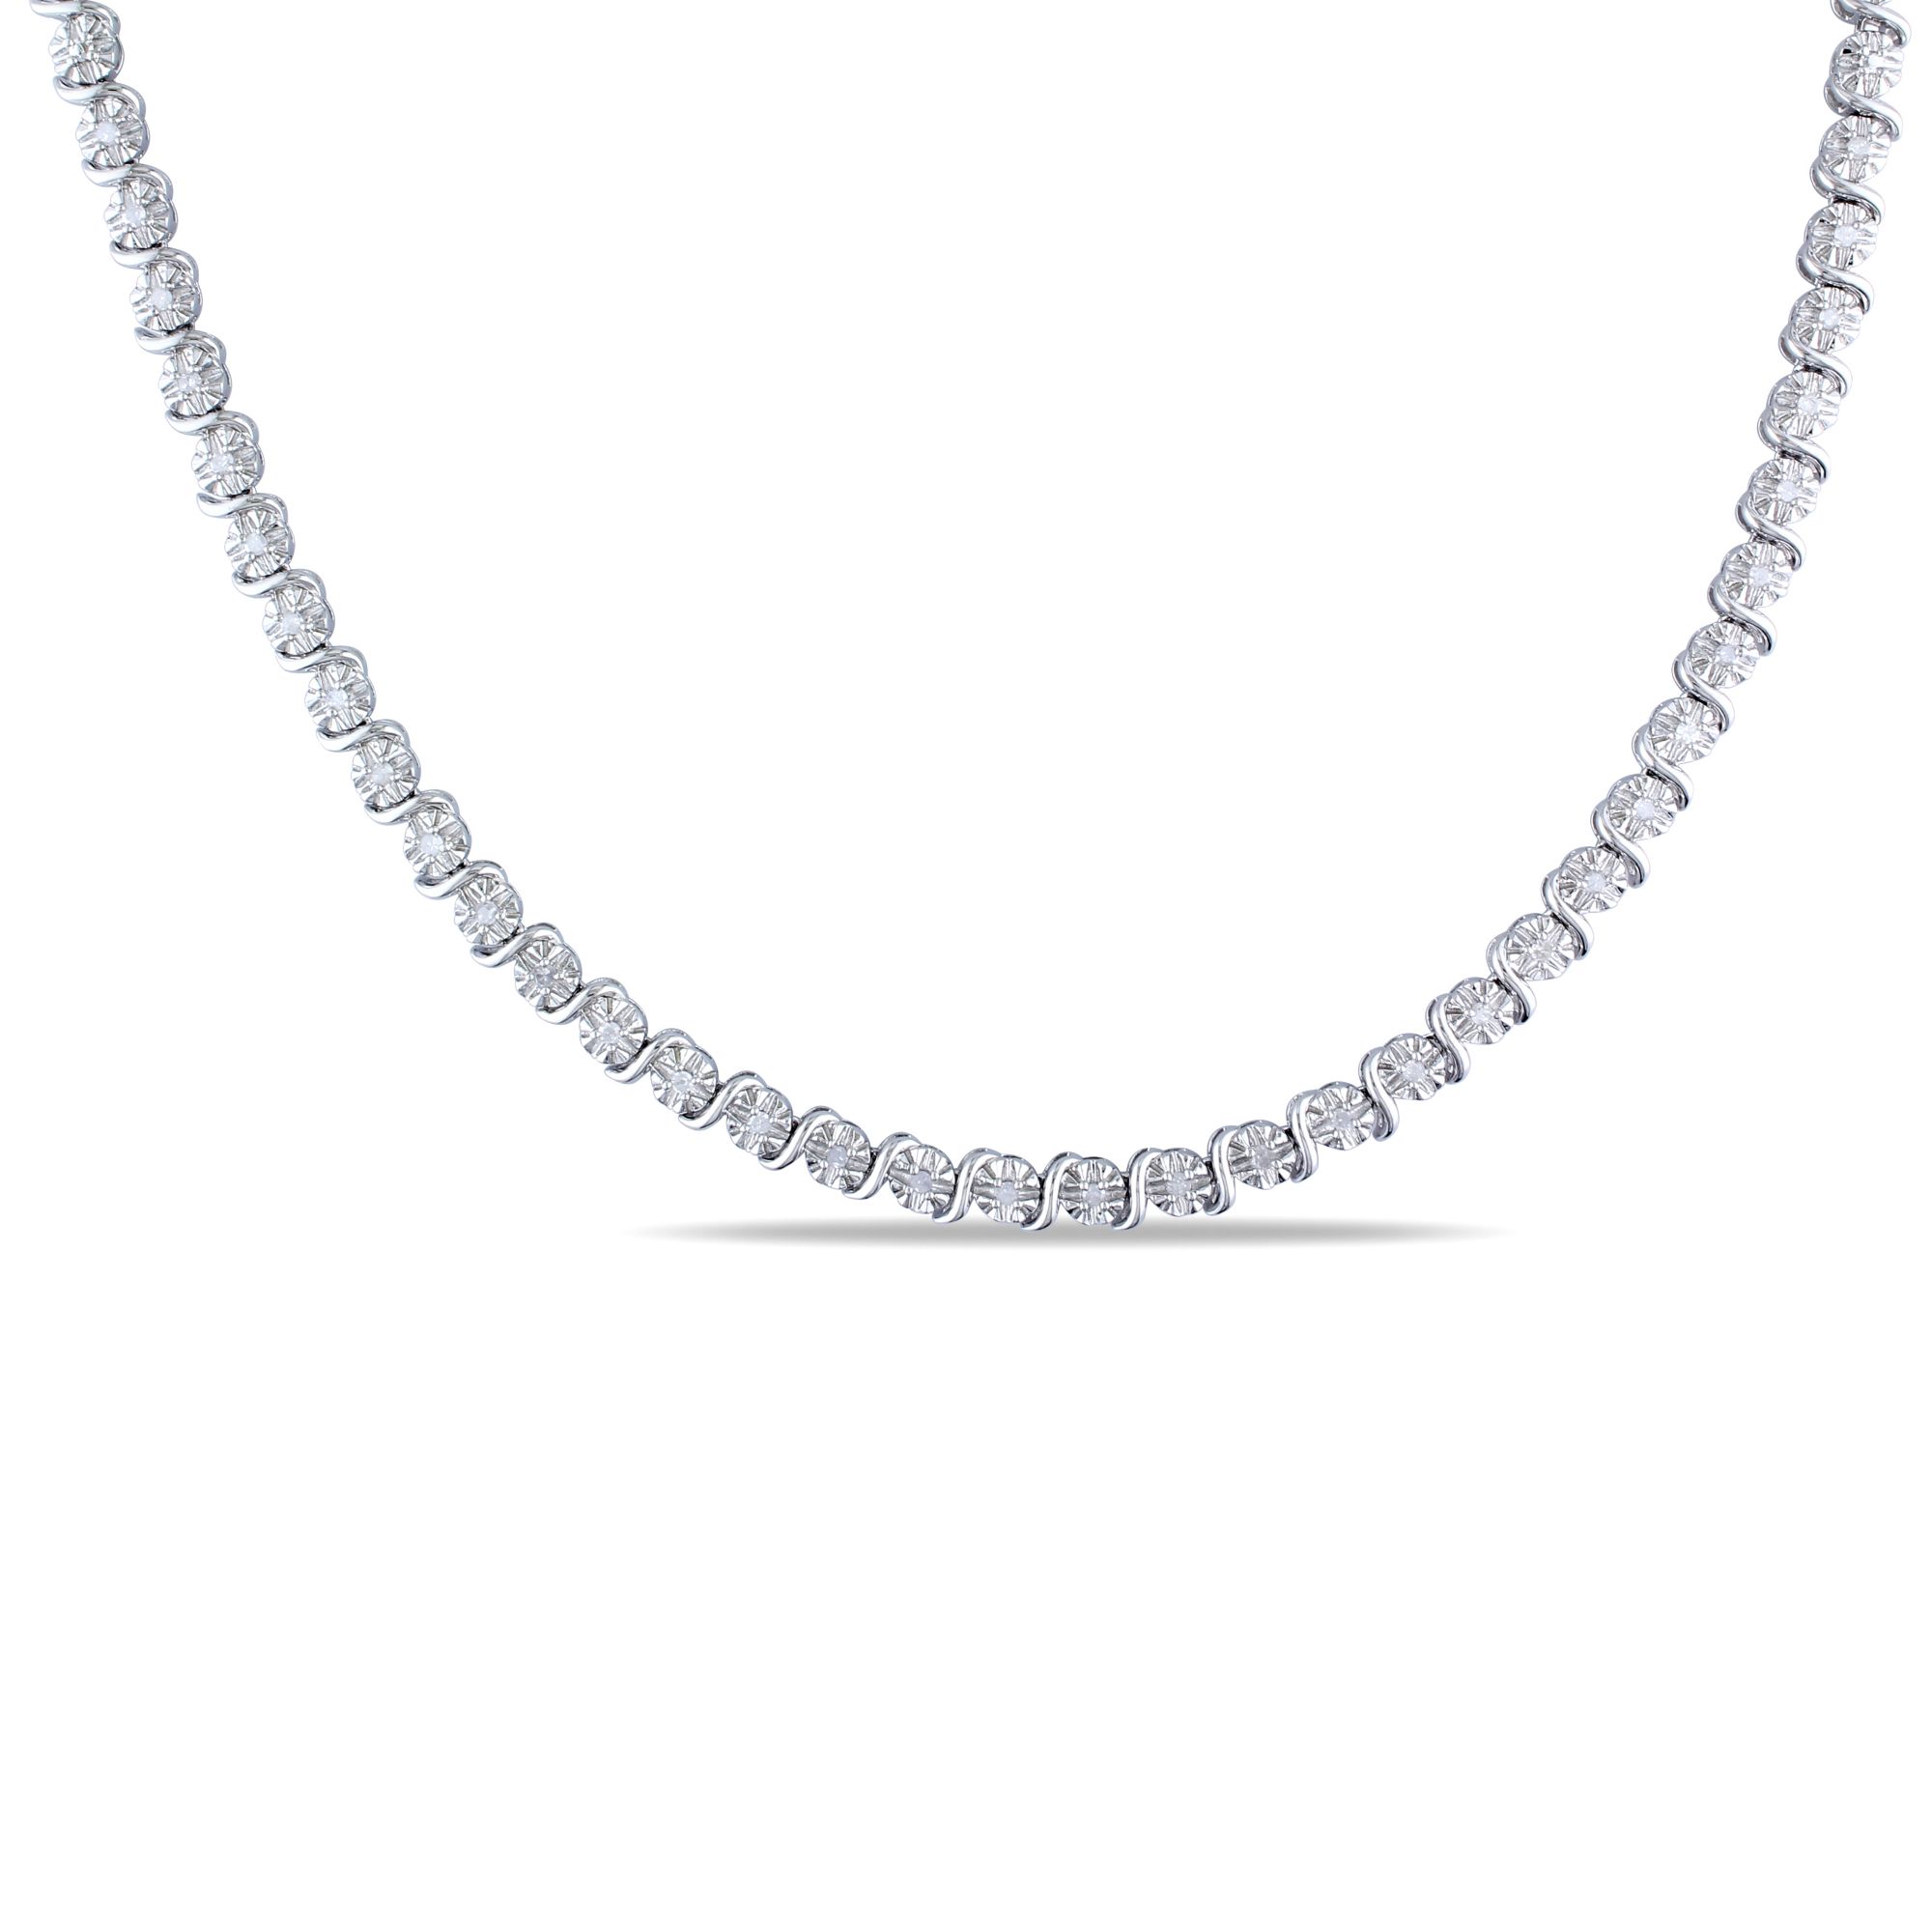 9 Carat Diamond Tennis Necklace in 14K White Gold